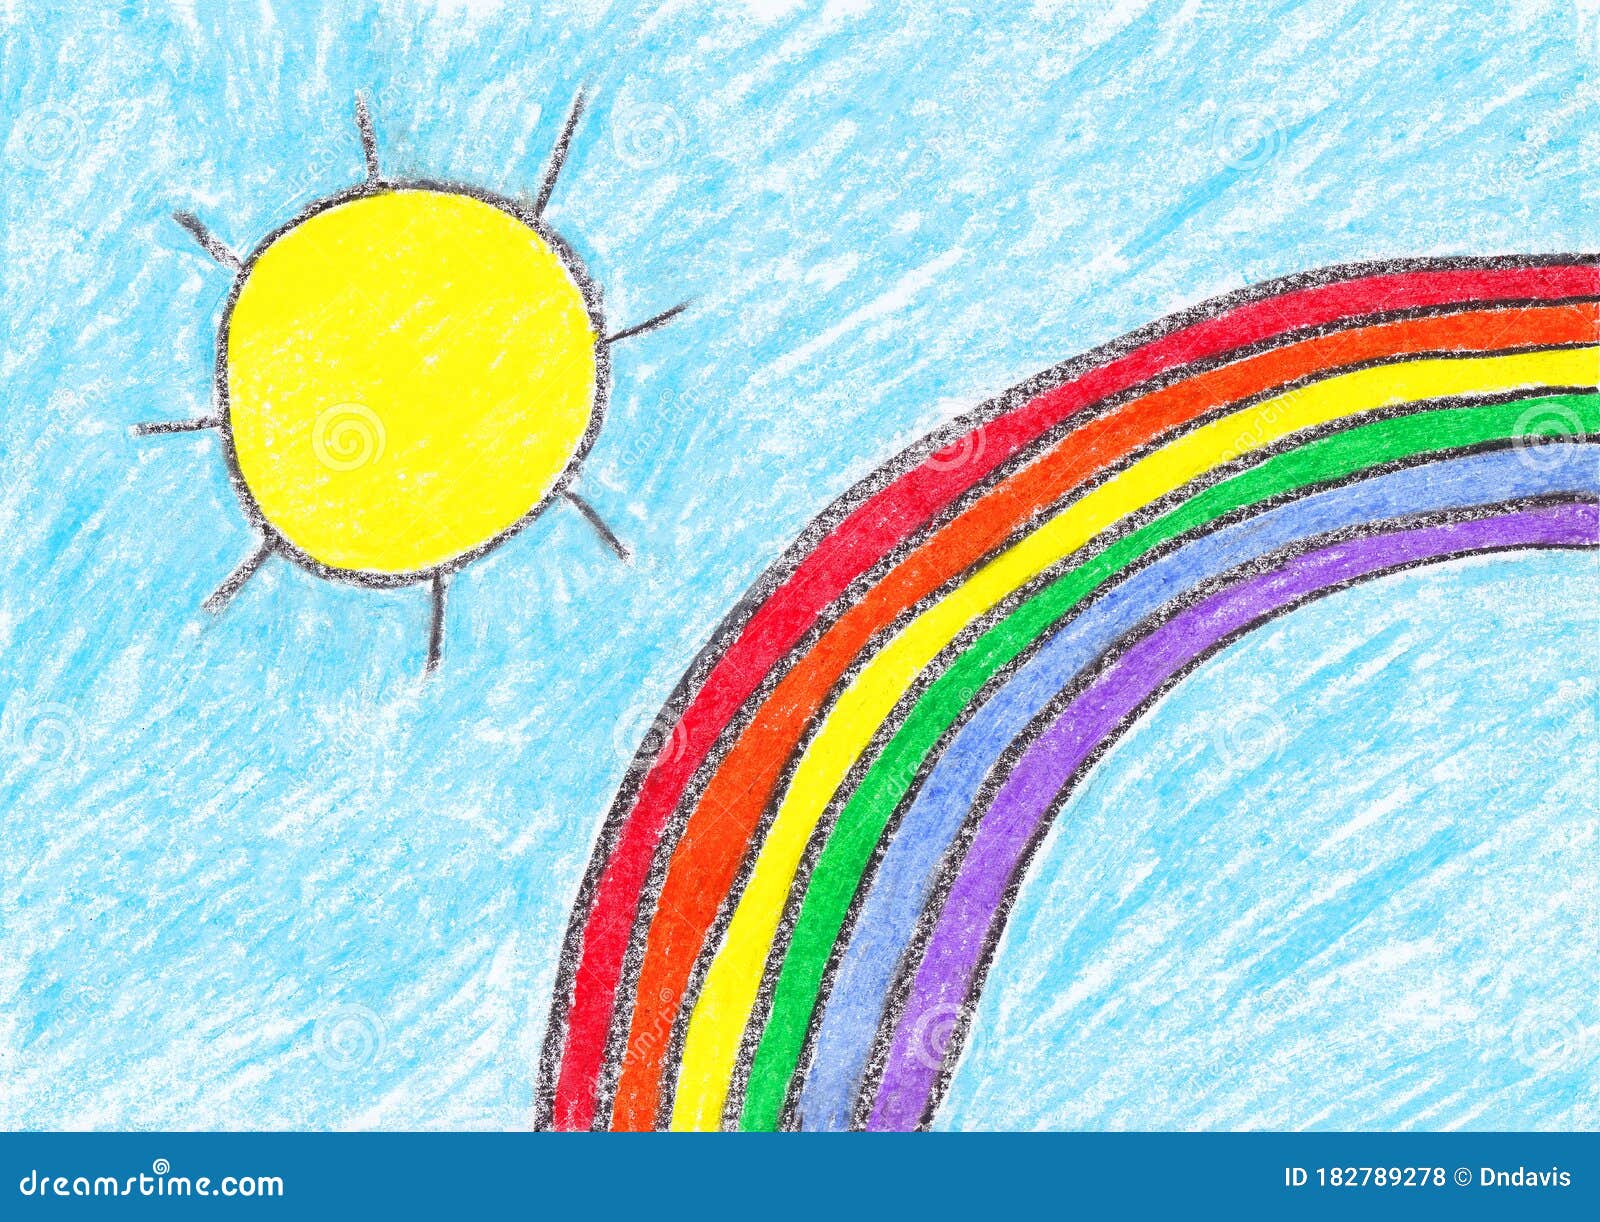 https://thumbs.dreamstime.com/z/child-s-drawing-sun-rainbow-simple-182789278.jpg